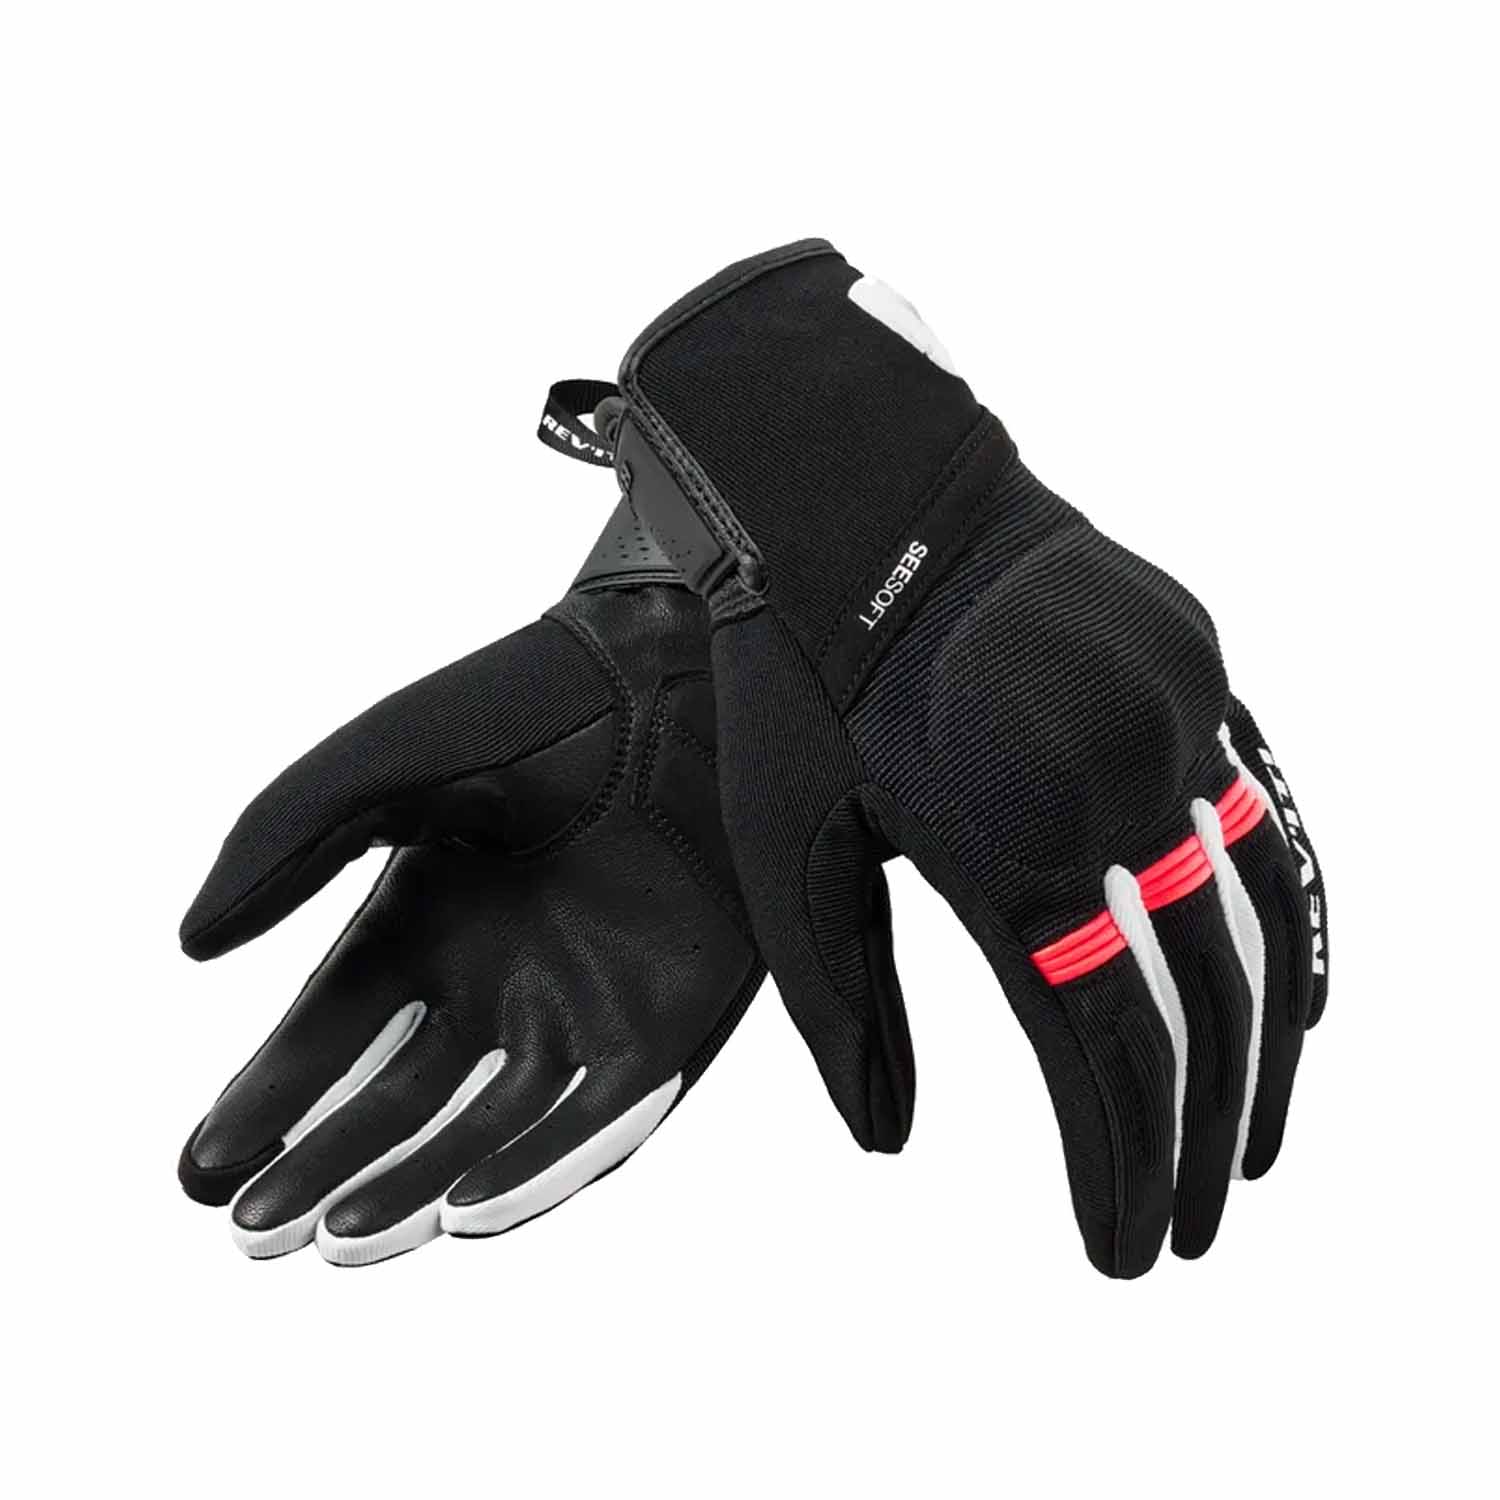 Image of REV'IT! Mosca 2 Ladies Gloves Black Pink Talla XS